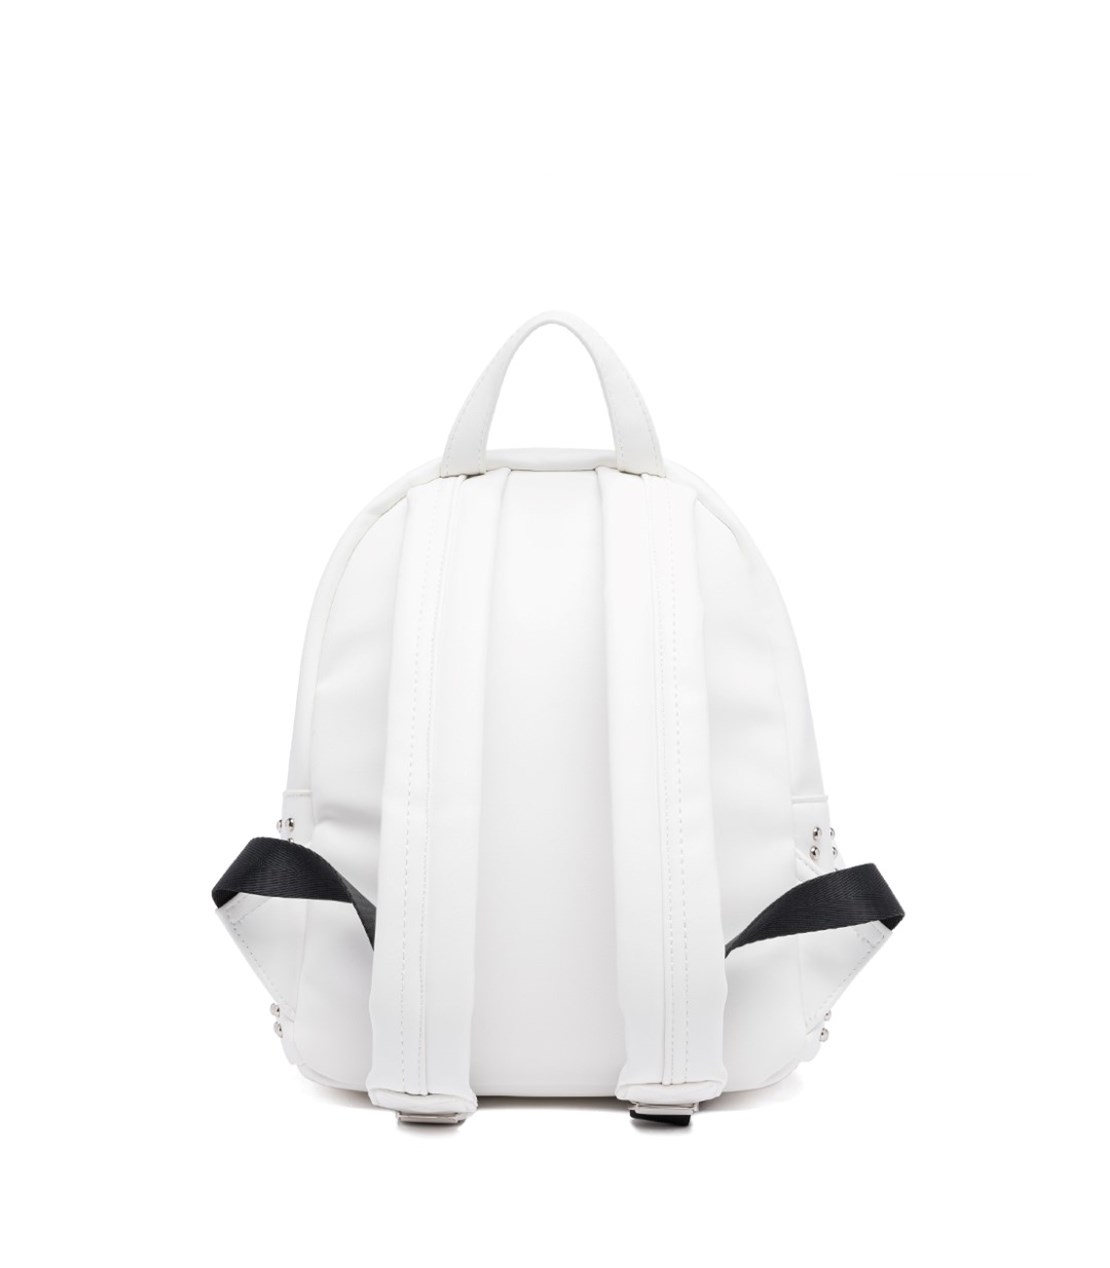 Replay bijeli ruksak sa zakovicama - Replay webshop